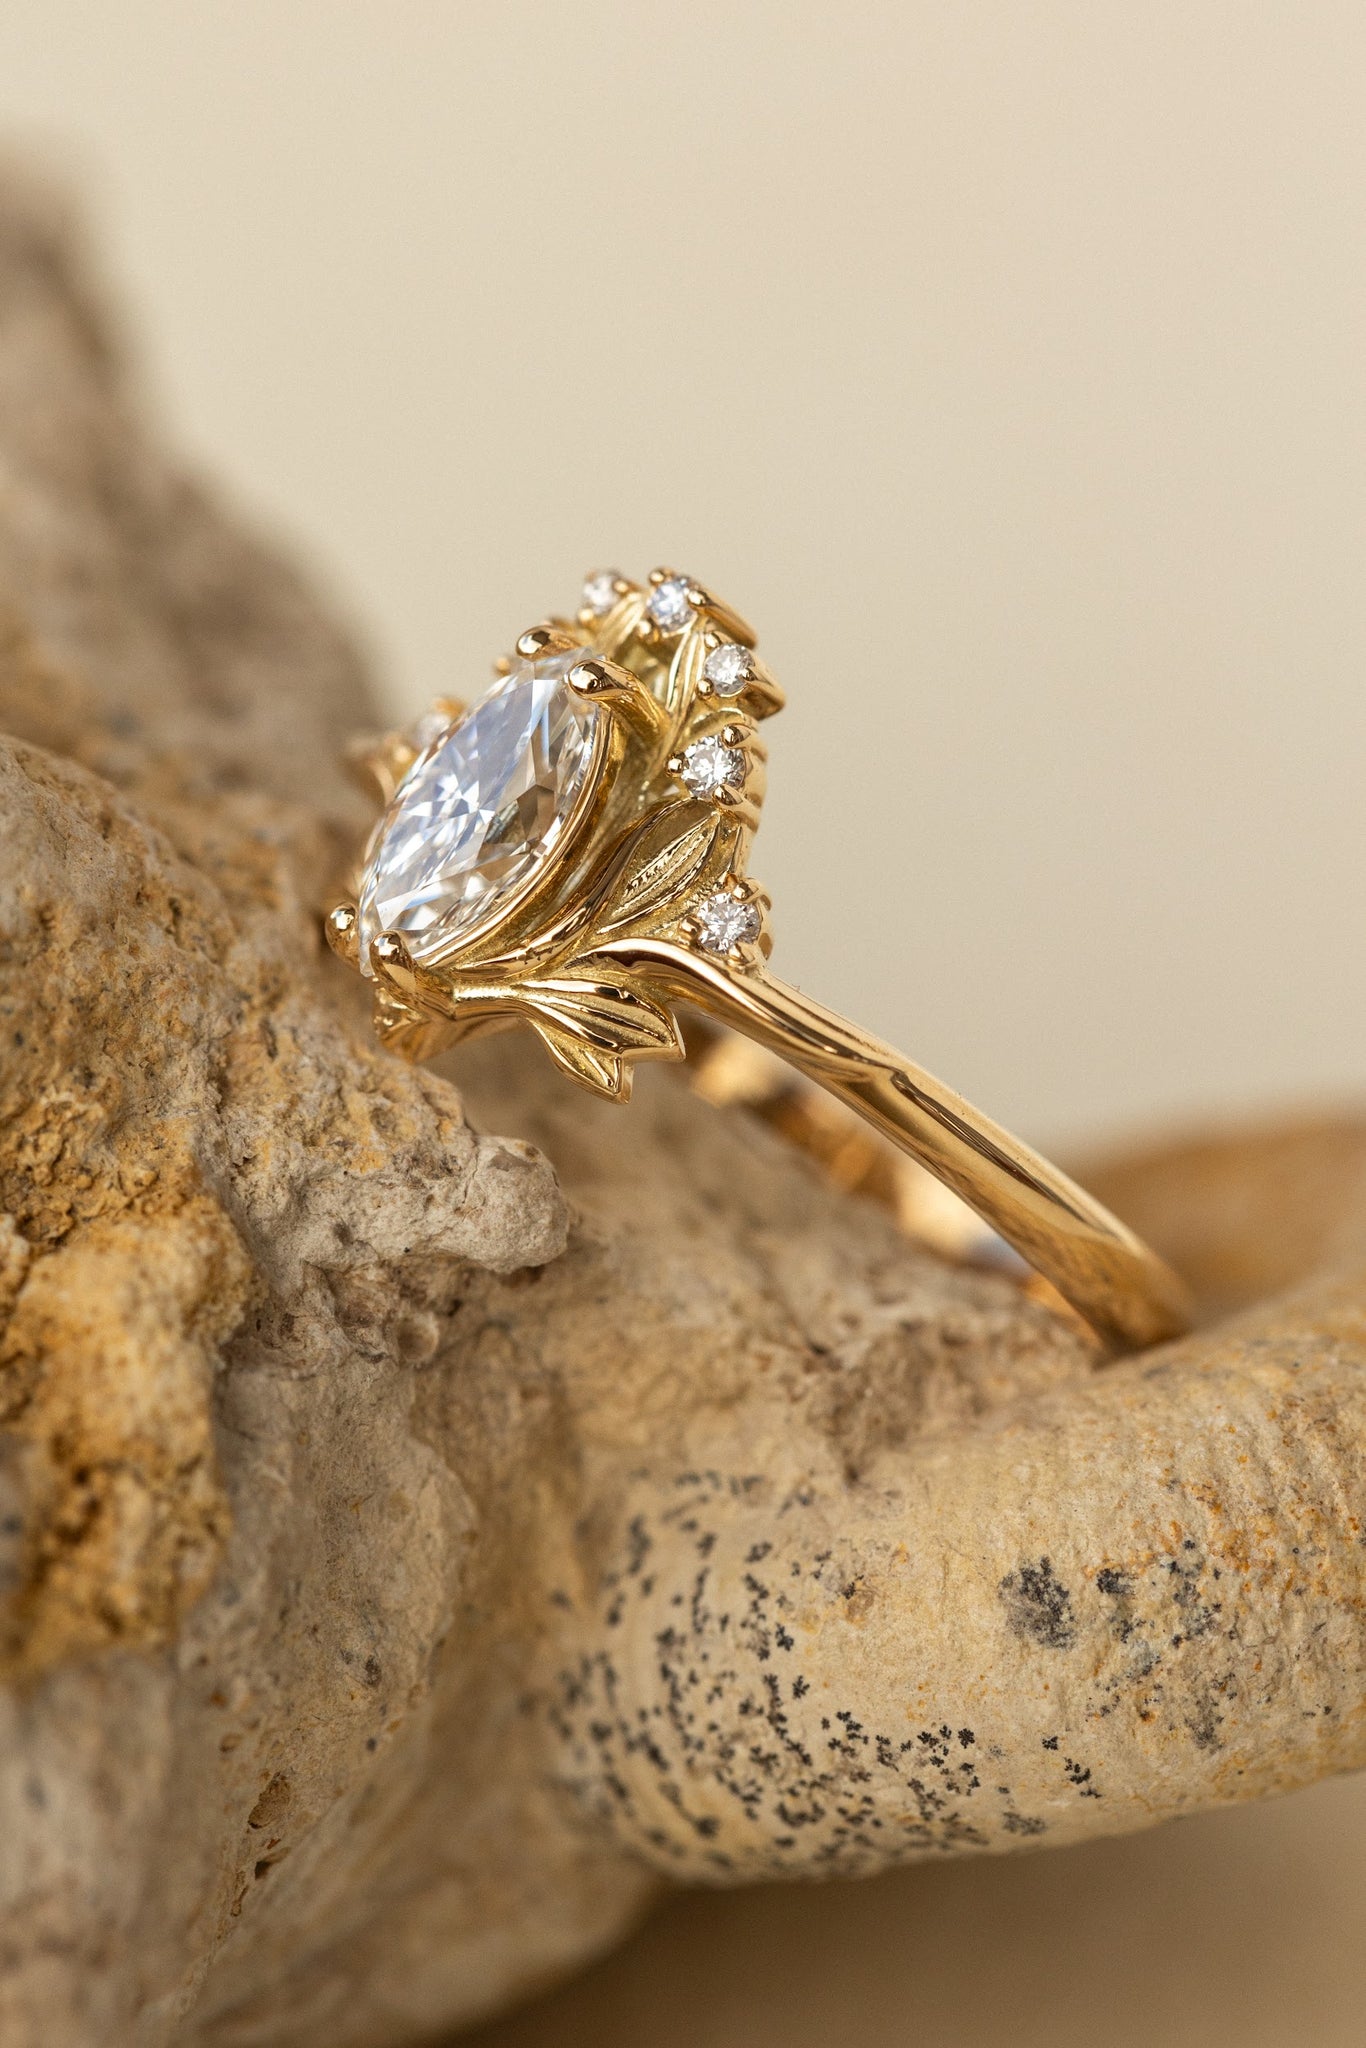 Lab grown diamond engagement ring, gold flower ring with diamonds / Iris - Eden Garden Jewelry™